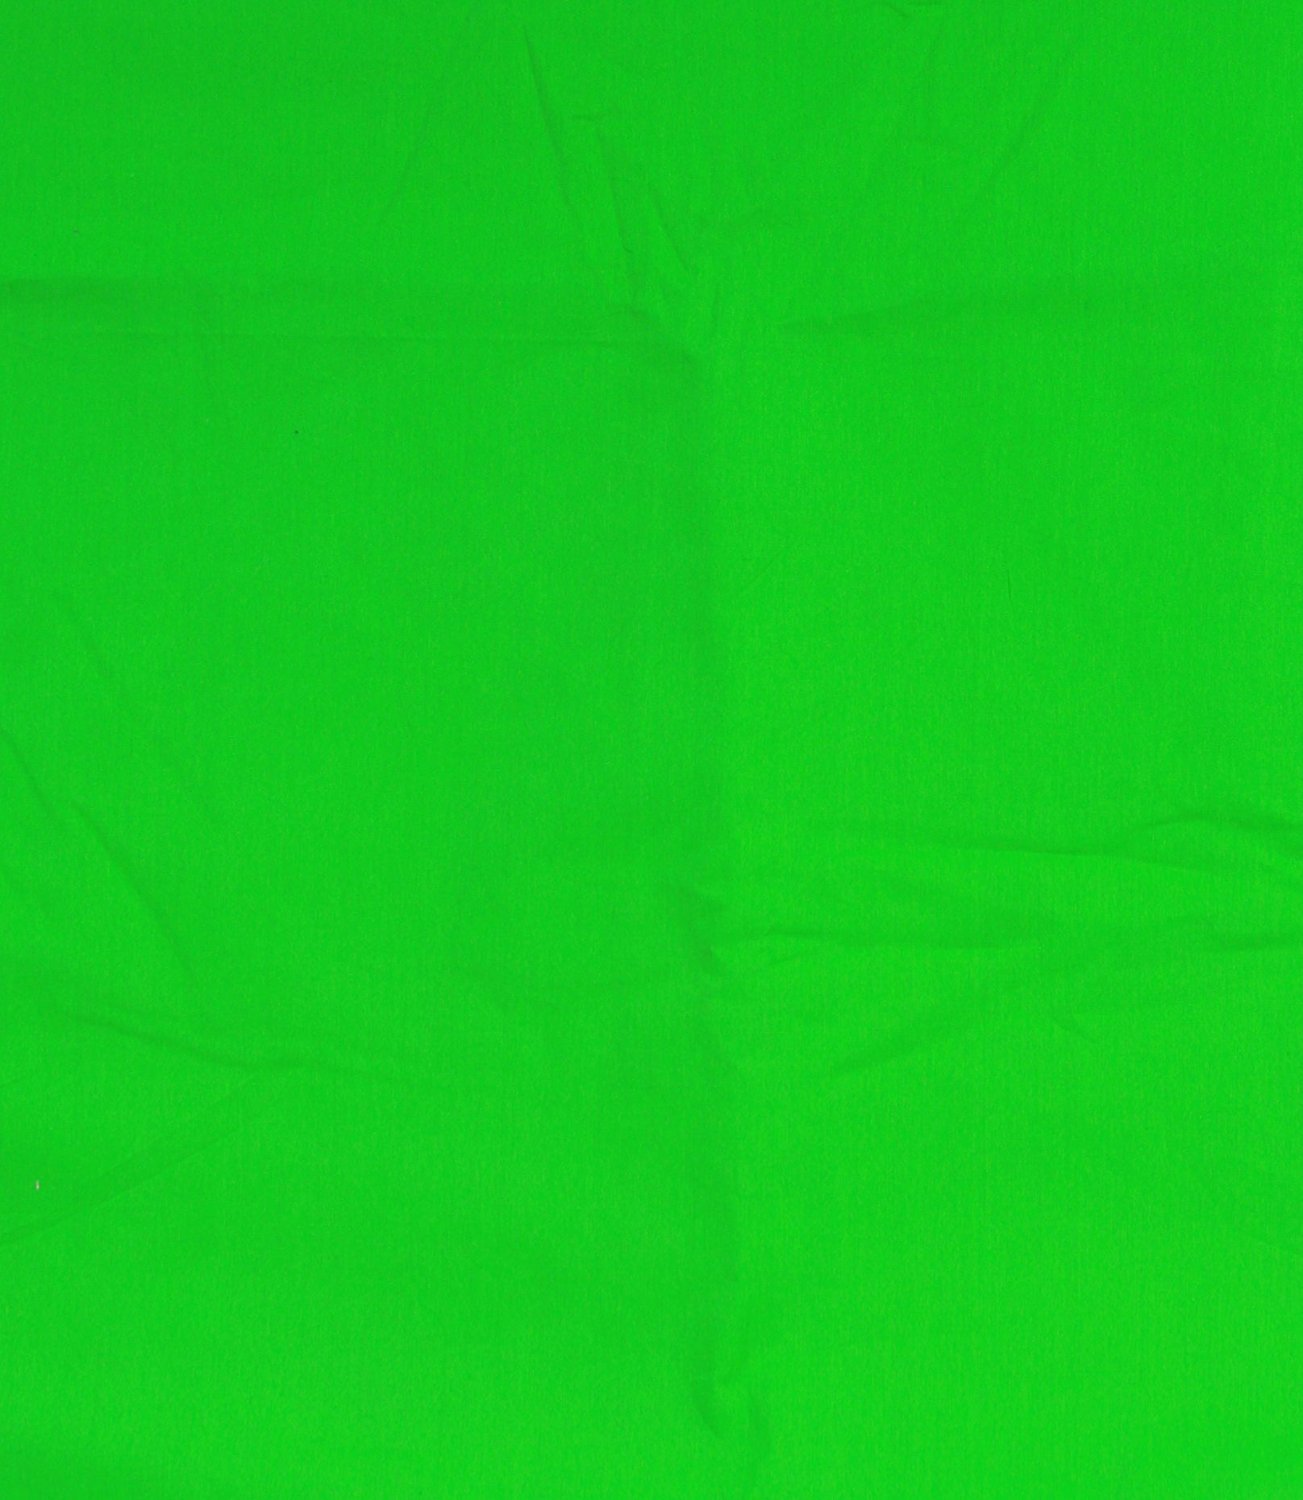 green screen wallpaper,grün,blau,blatt,rot,gelb